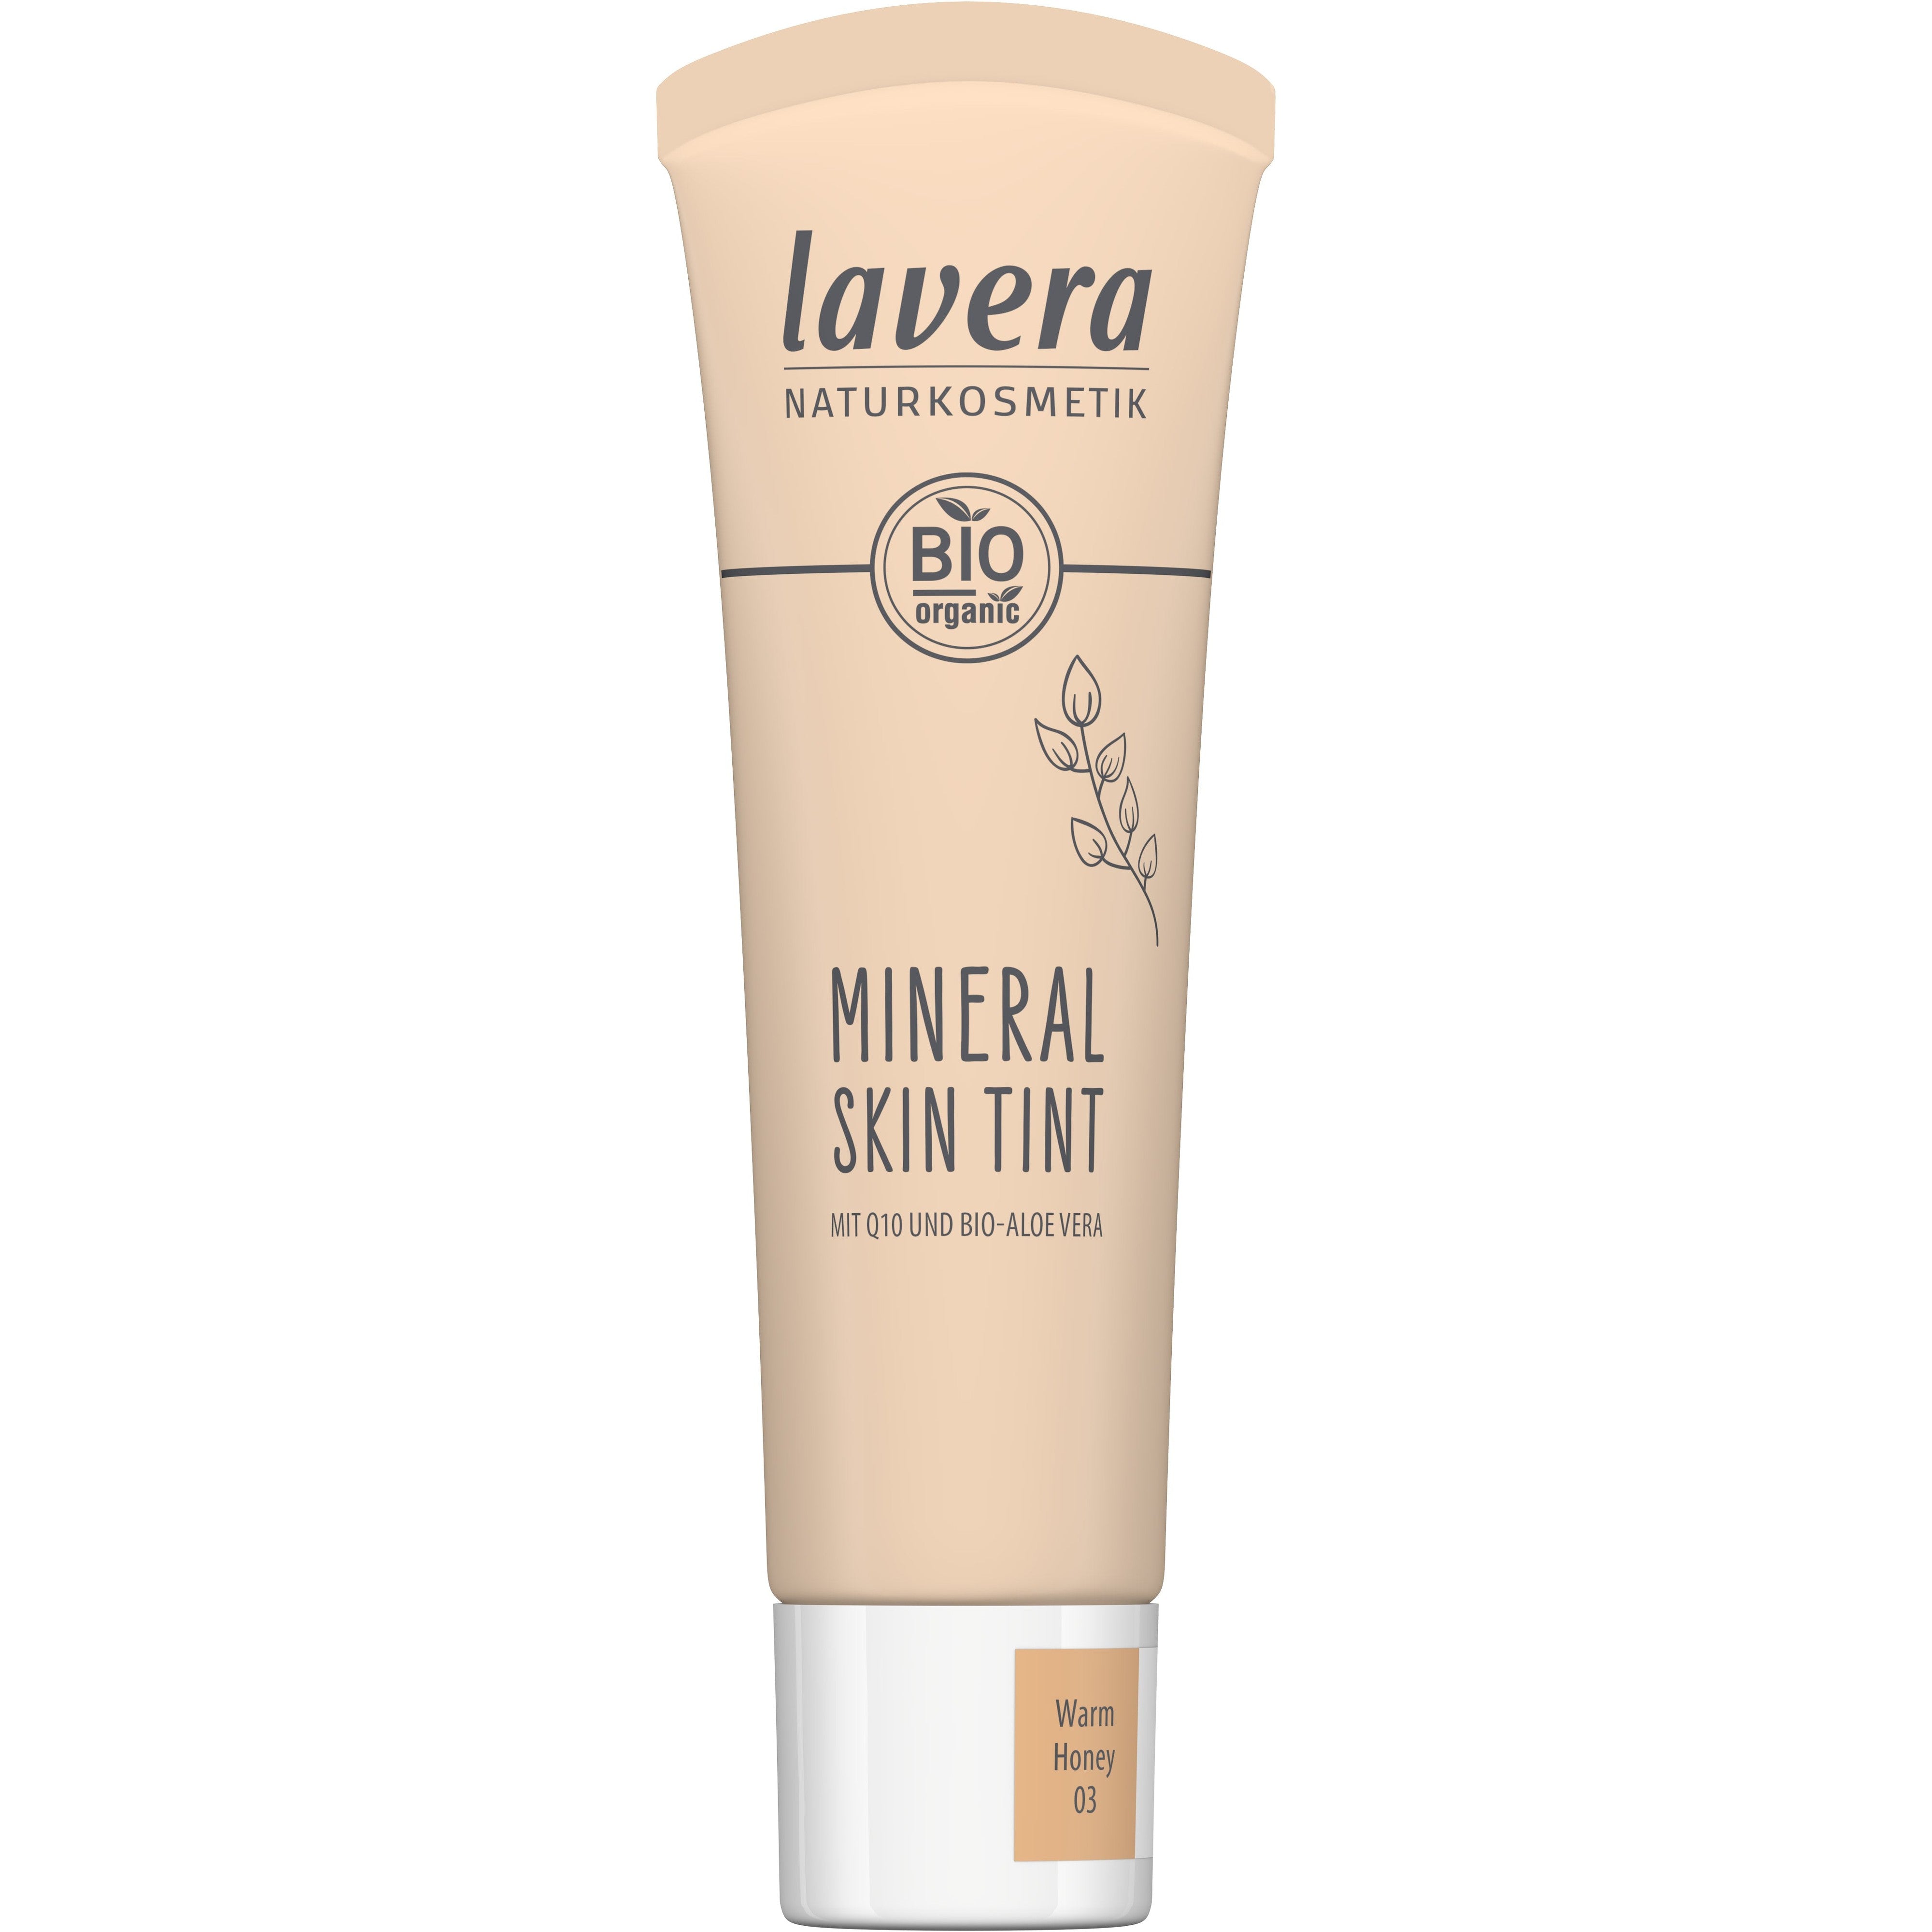 Lavera Mineral Skin Tint meikkivoide Warm Honey 03